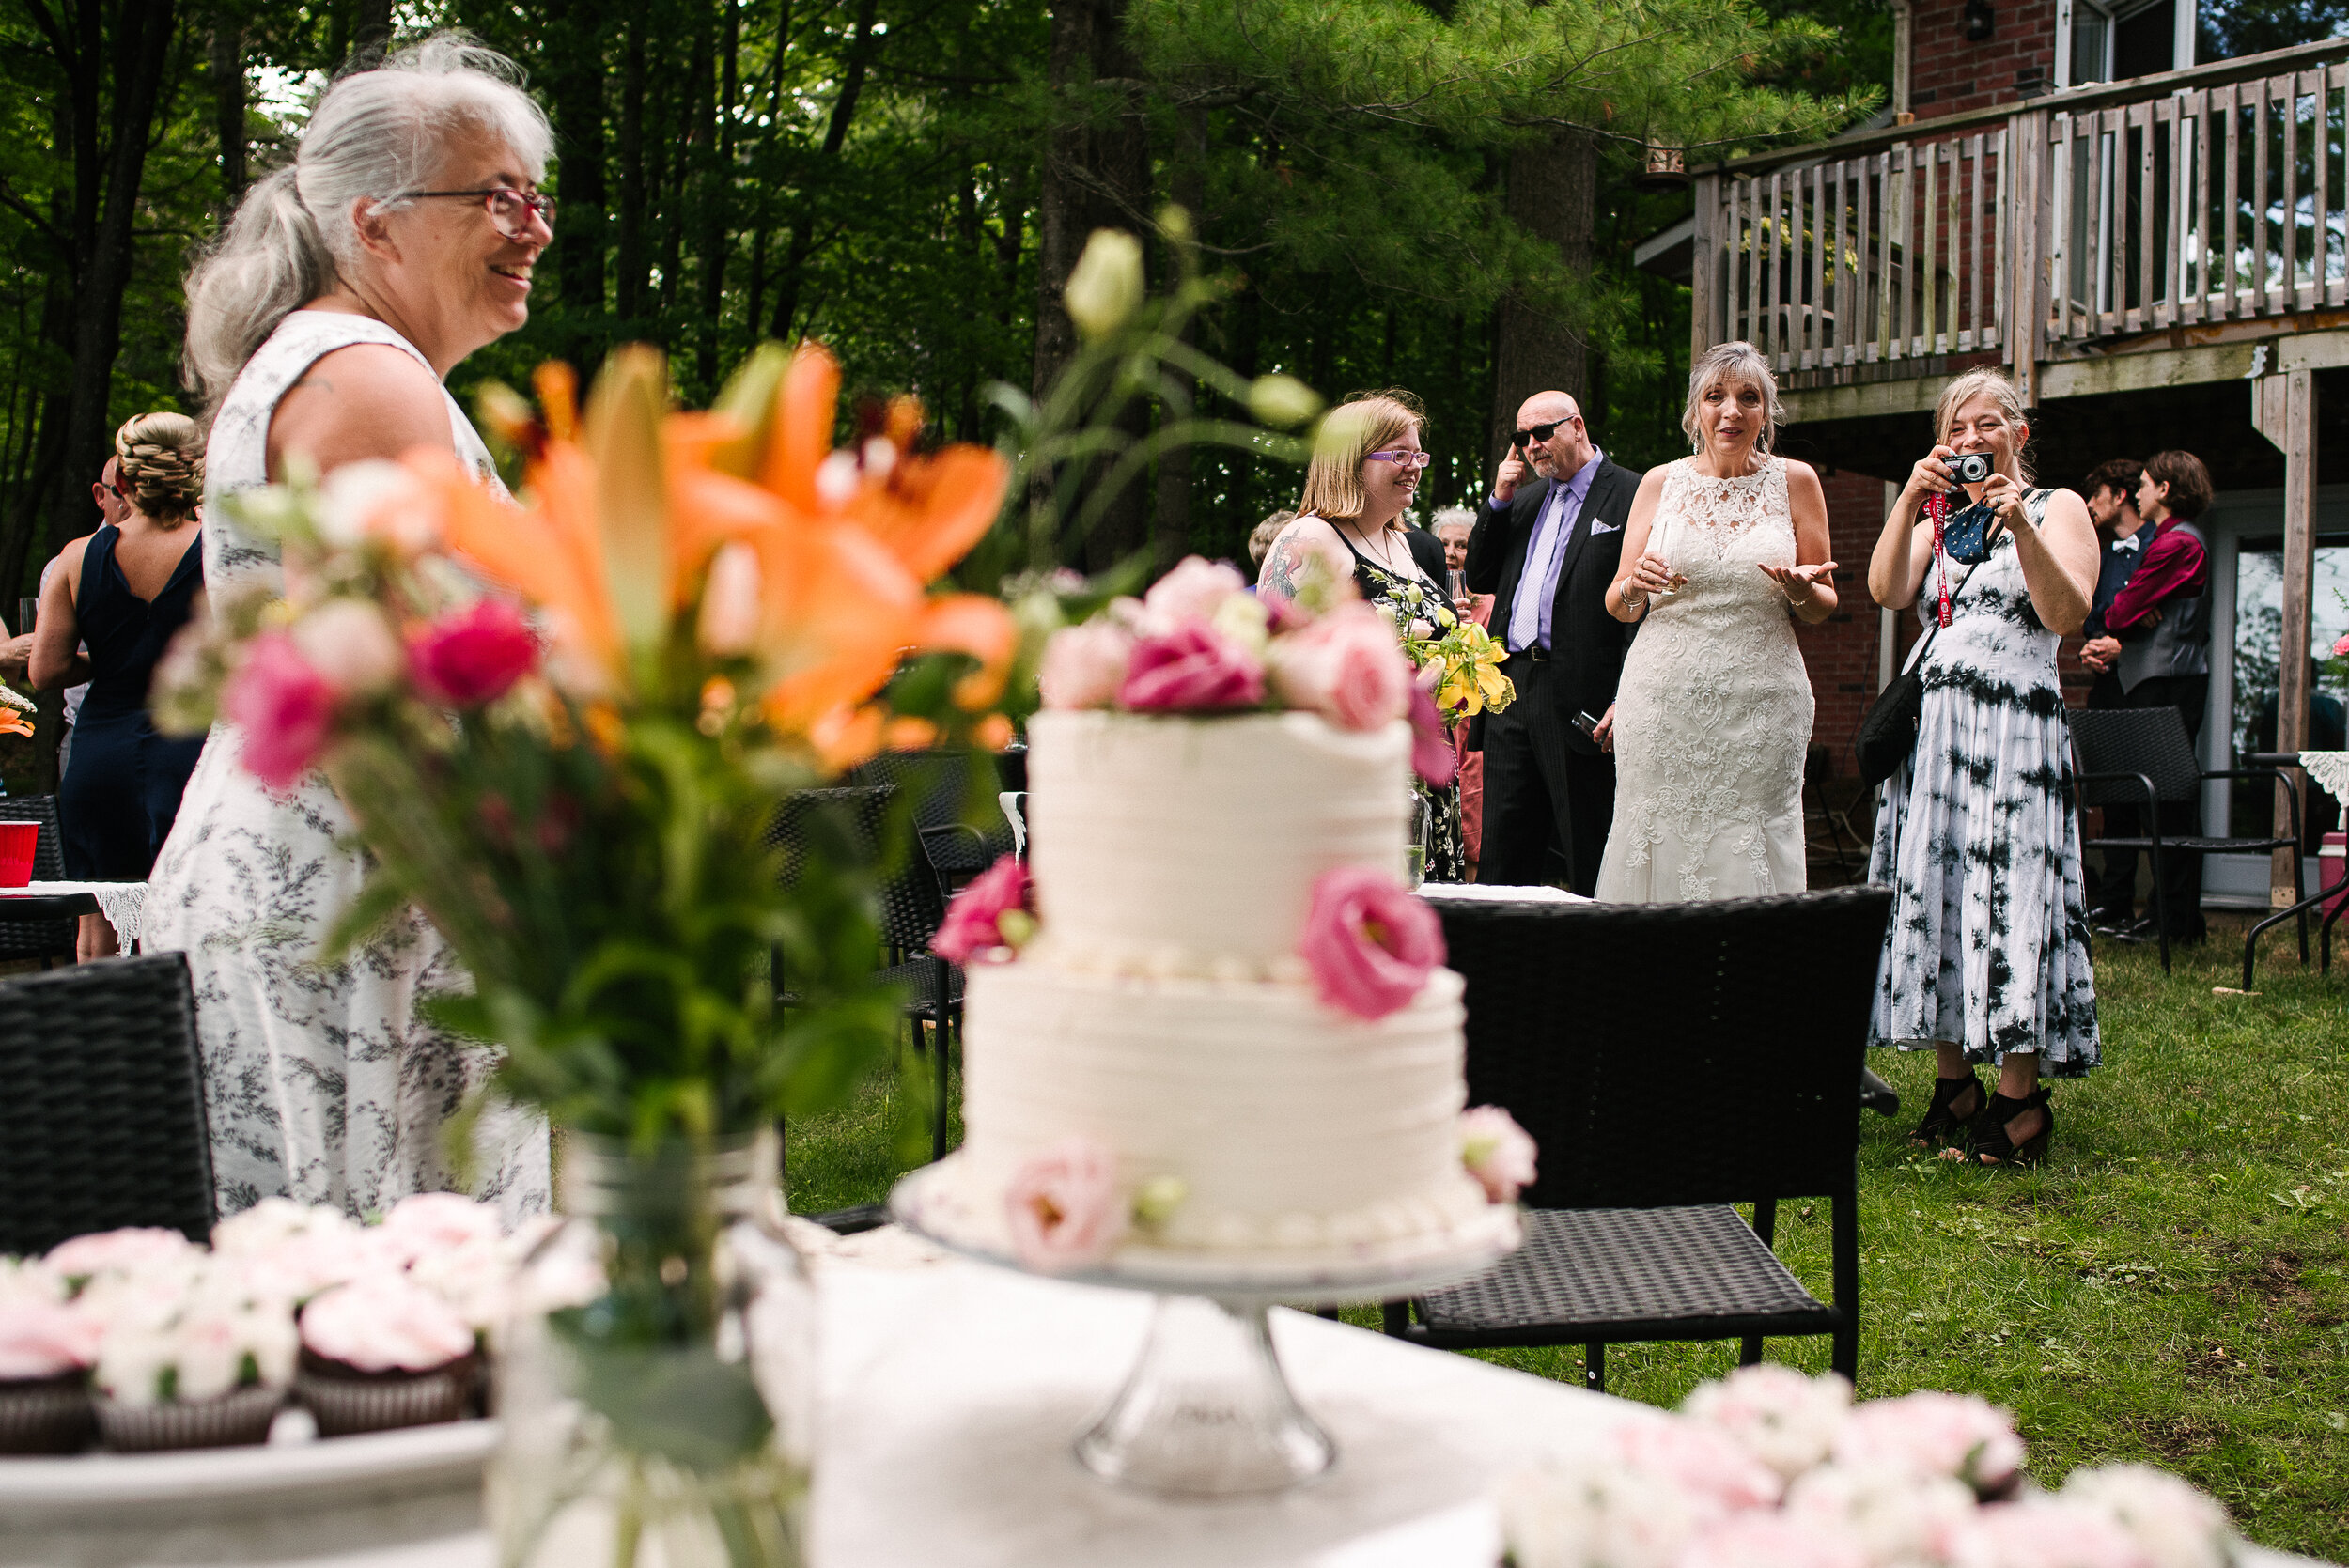 Wedding cake at wedding in Verona, Ontario